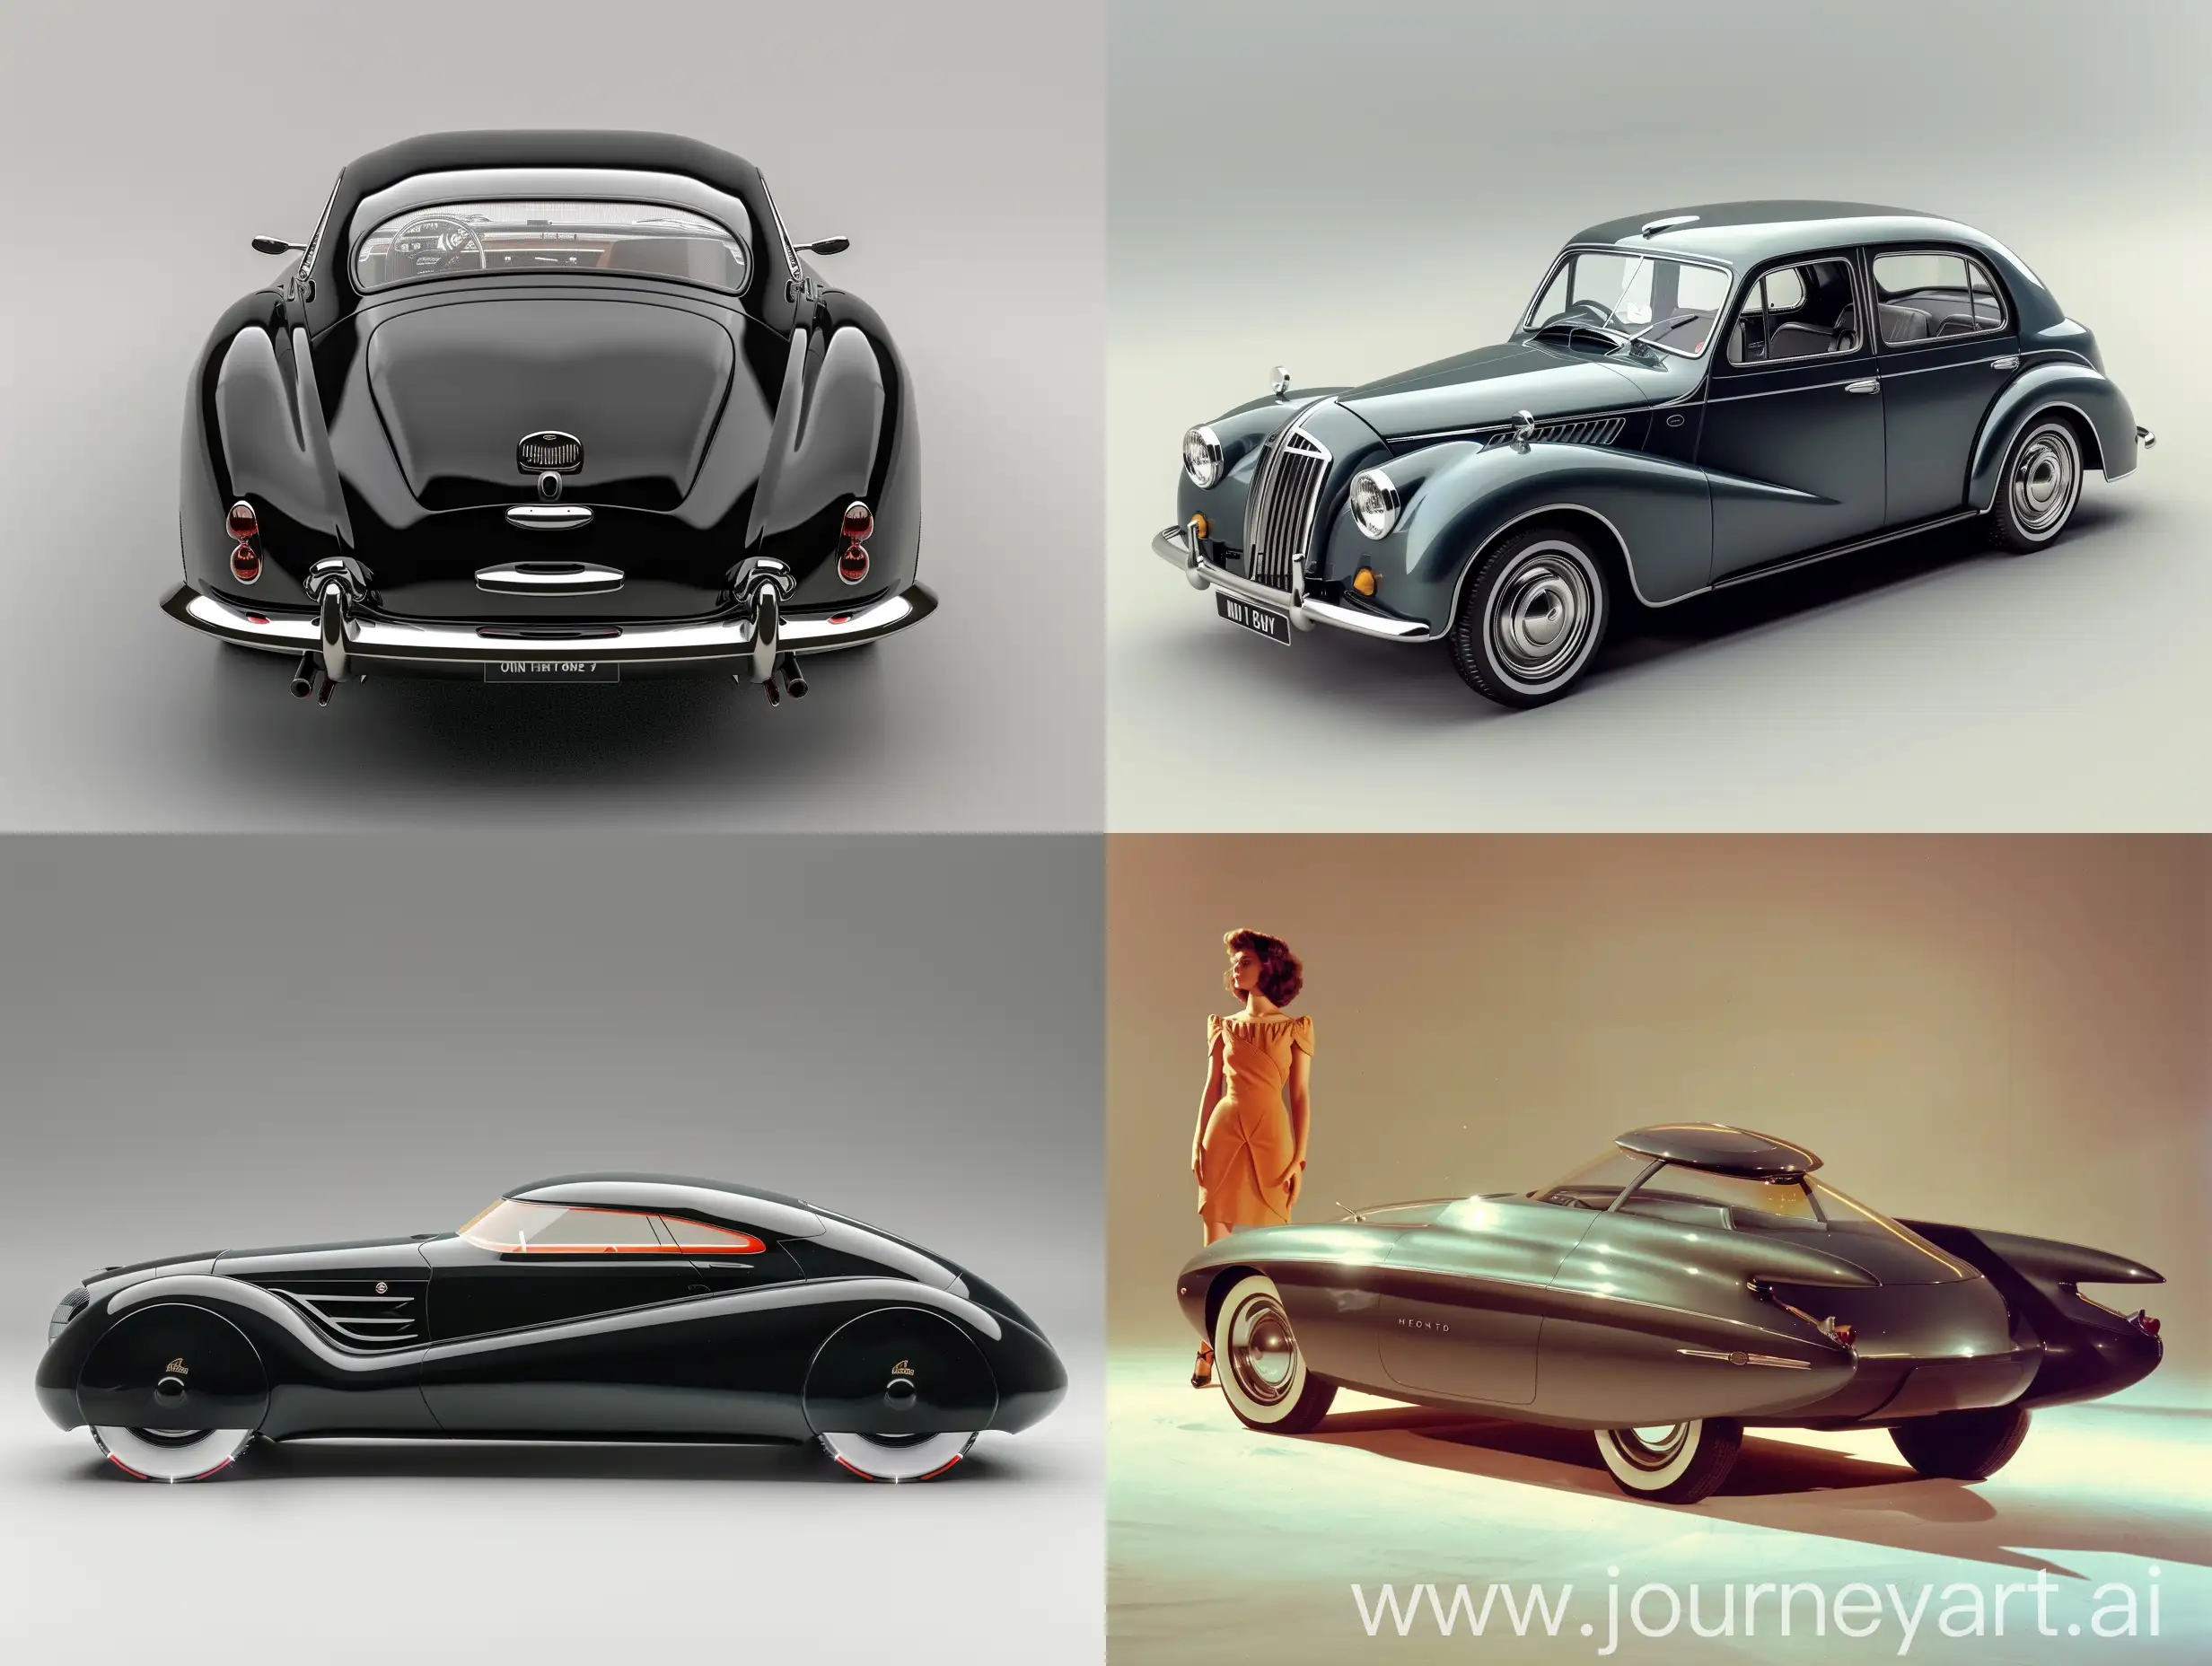 Futuristic-Redesigned-Morris-Oxford-Series-III-Classic-Car